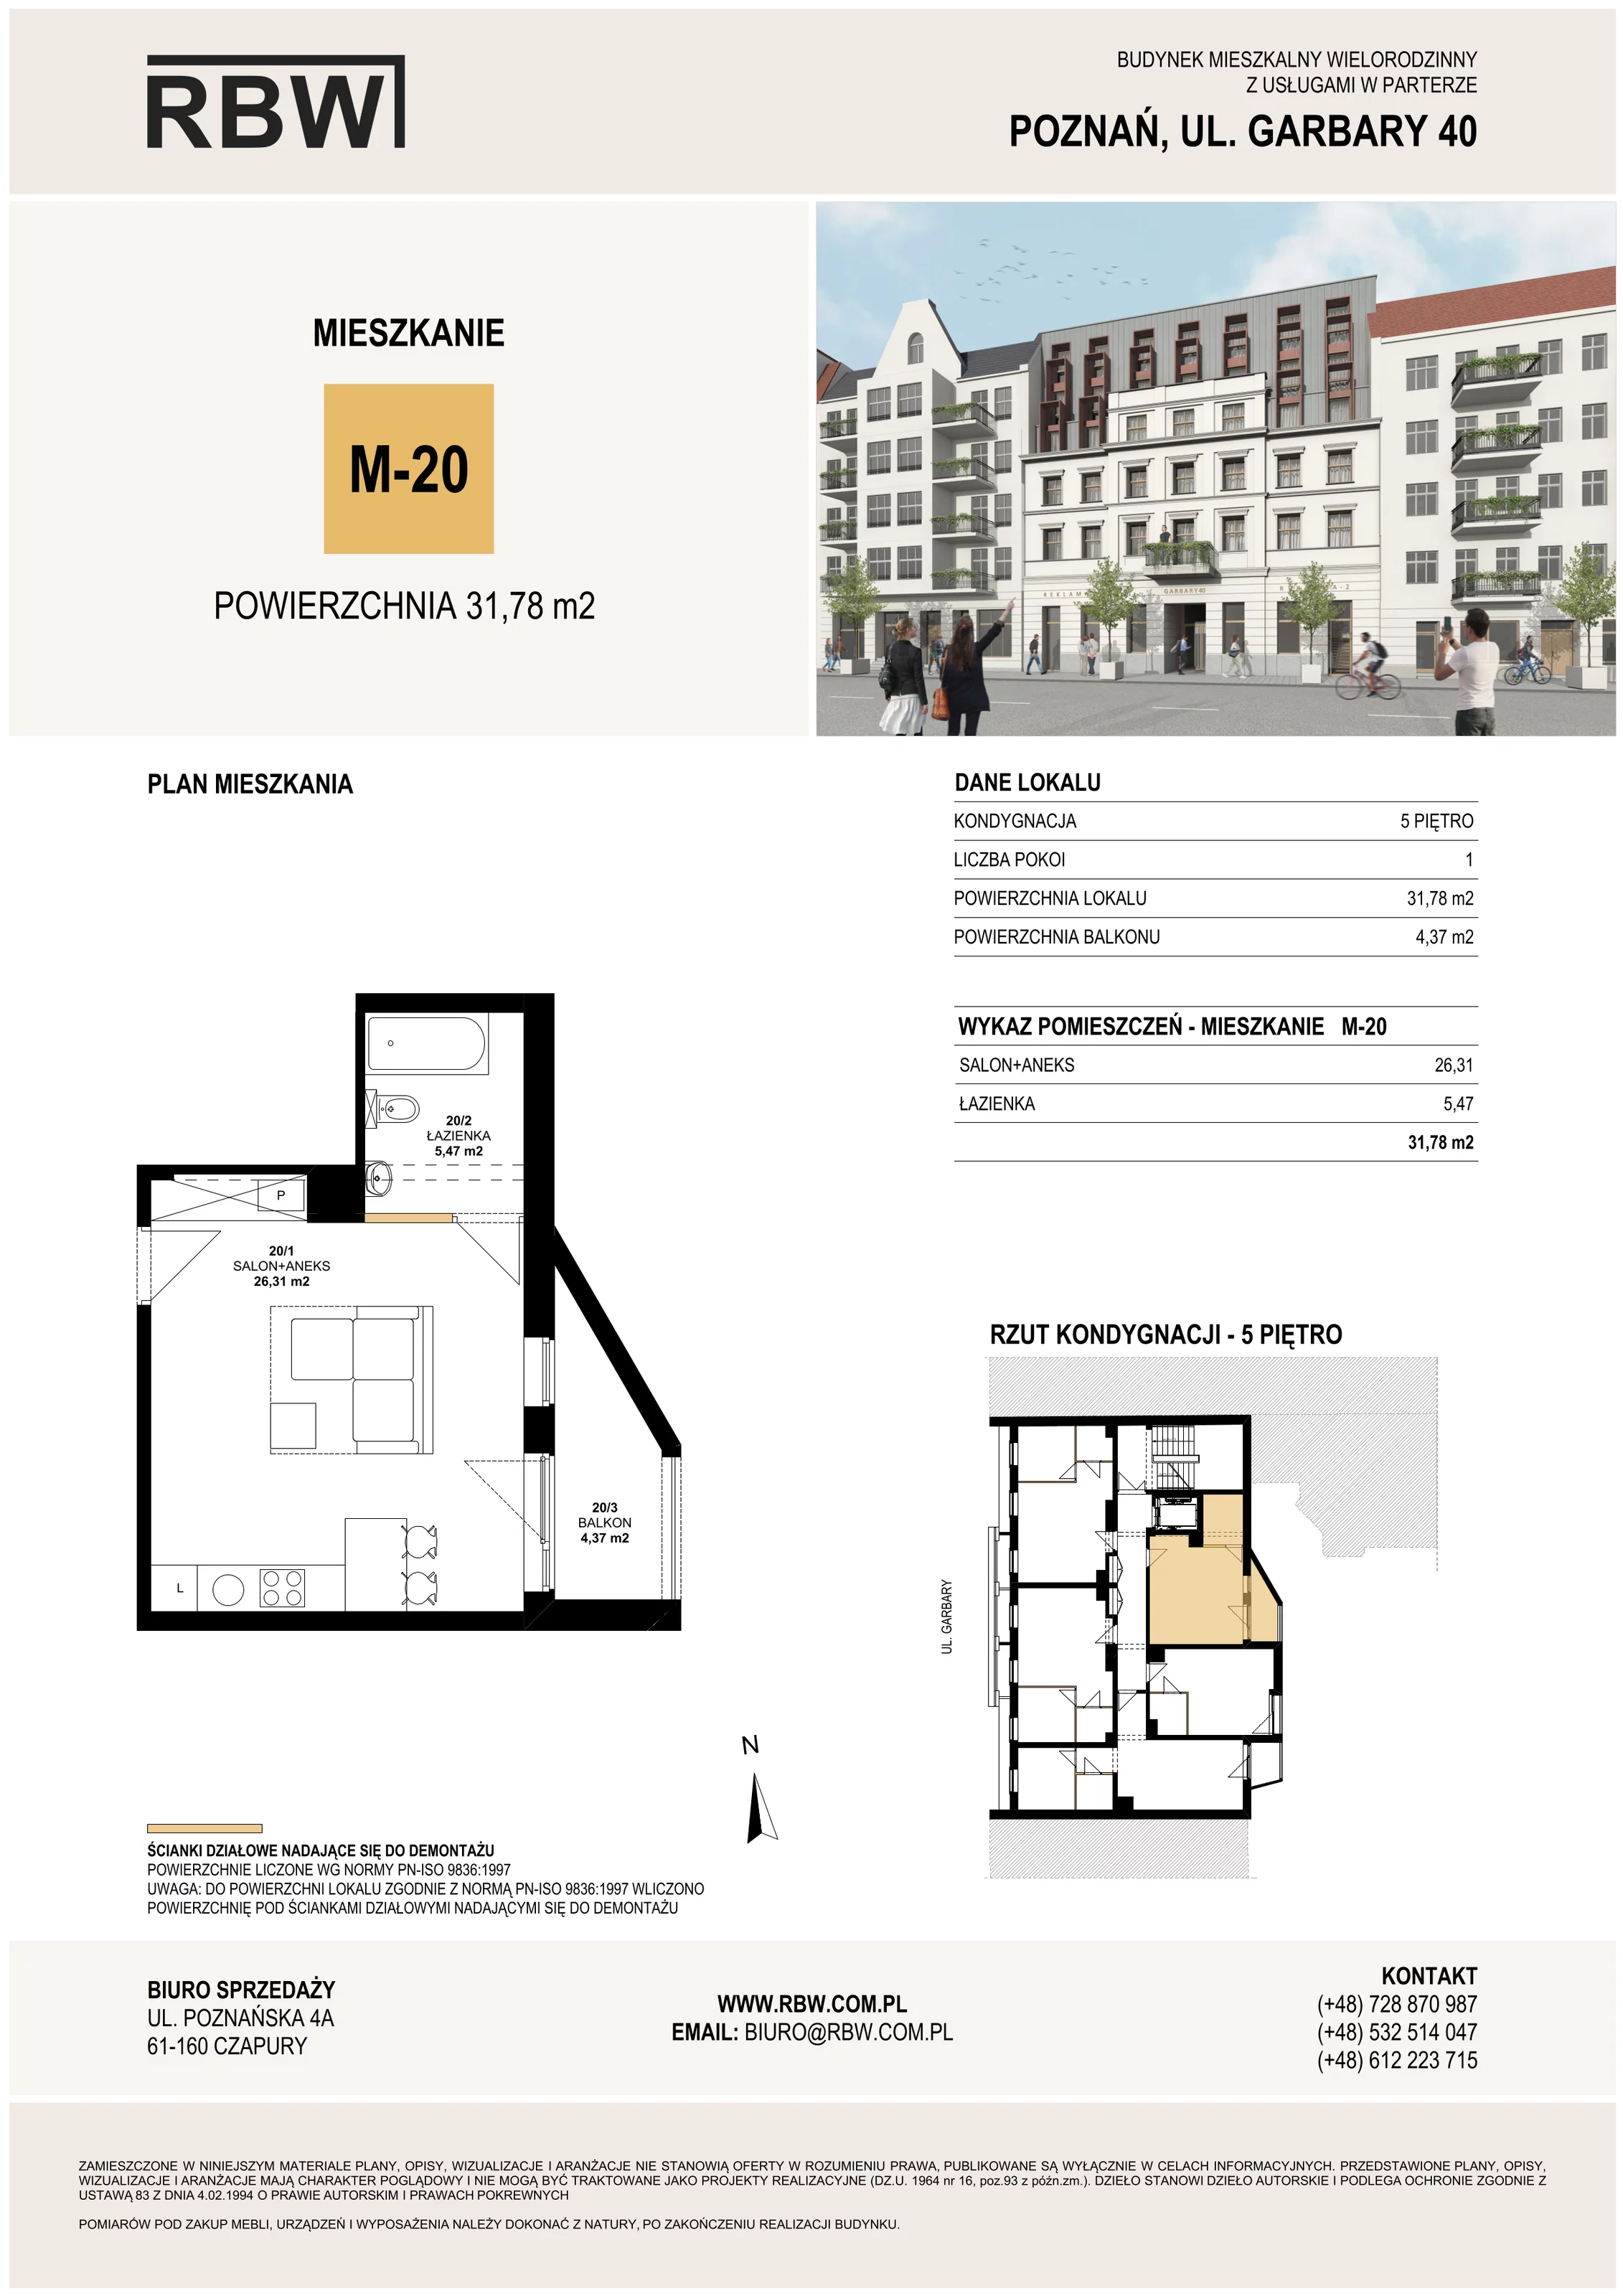 Mieszkanie 31,78 m², piętro 5, oferta nr M20, Garbary 40, Poznań, Stare Miasto, Stare Miasto, ul. Garbary 40